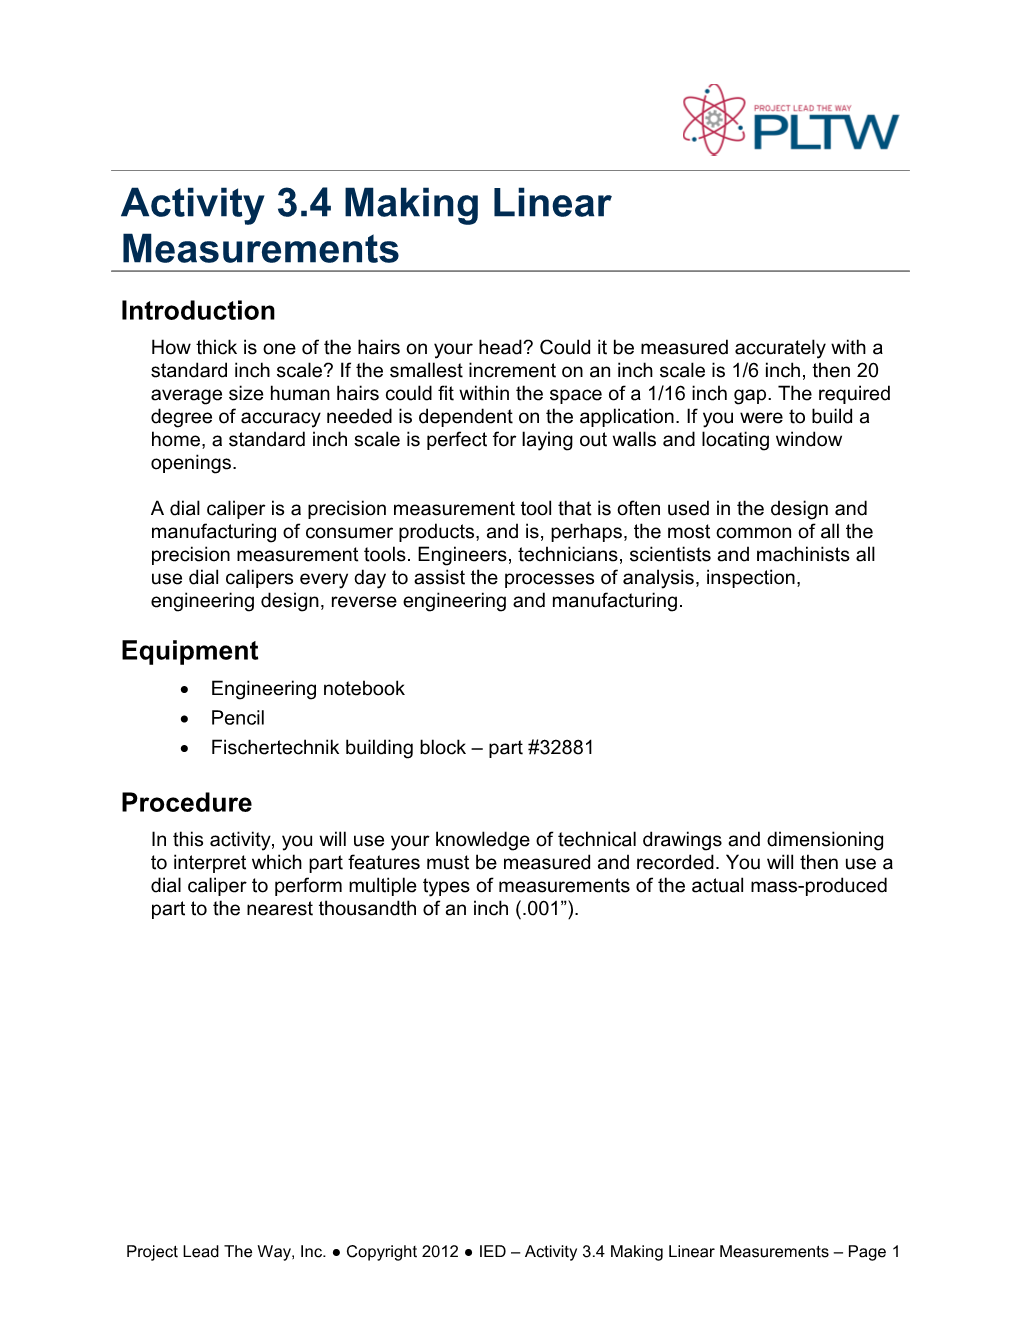 Activity 3.4 Making Linear Measurements